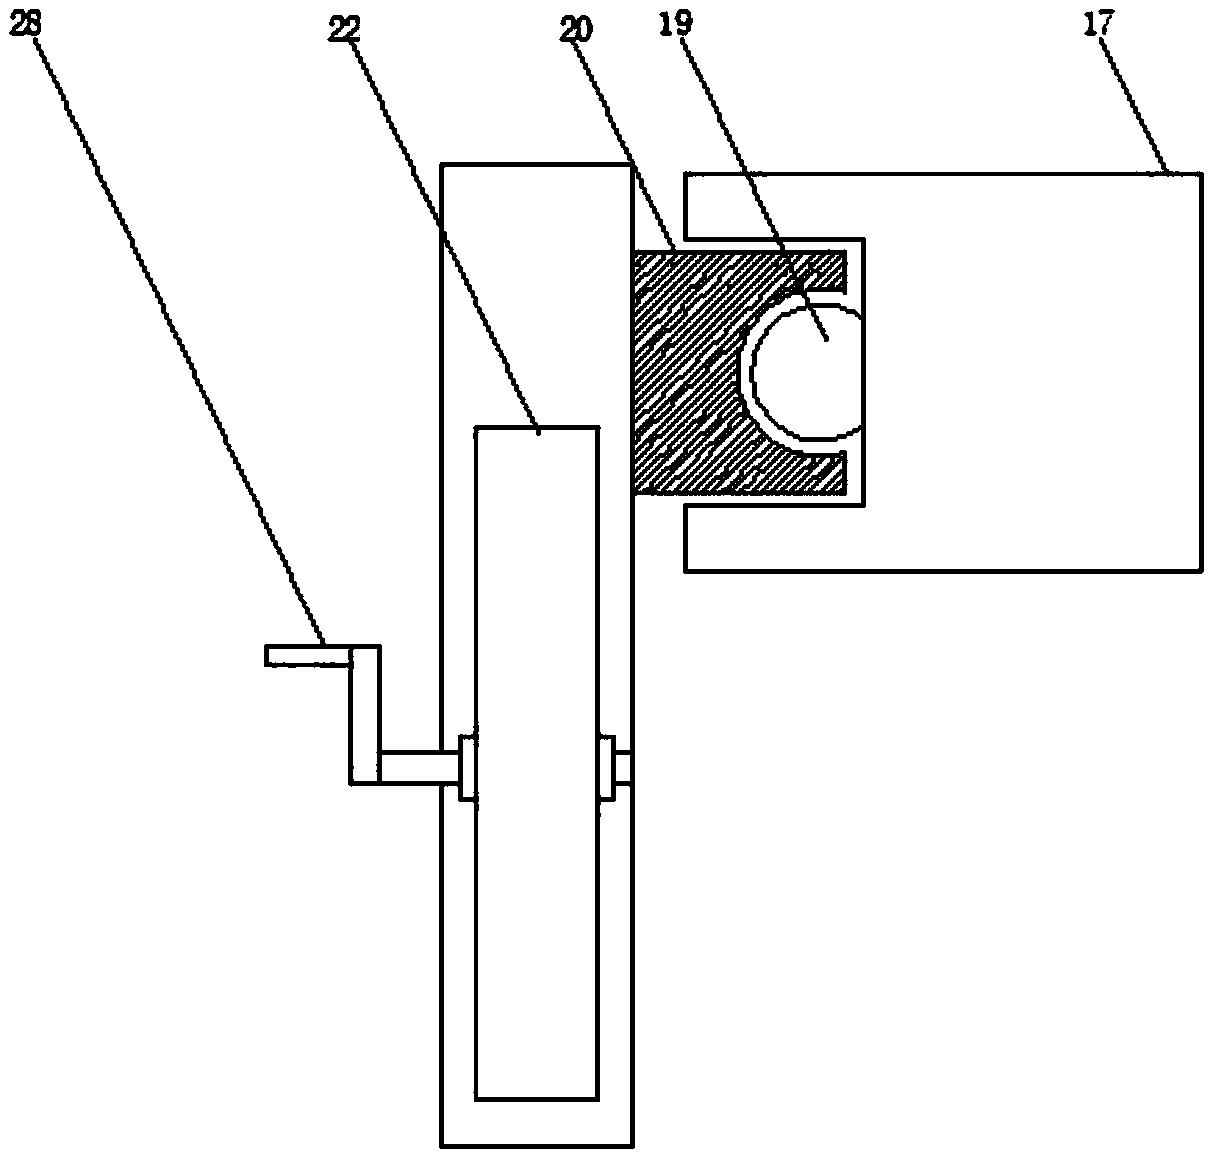 Teflon rod grinding device